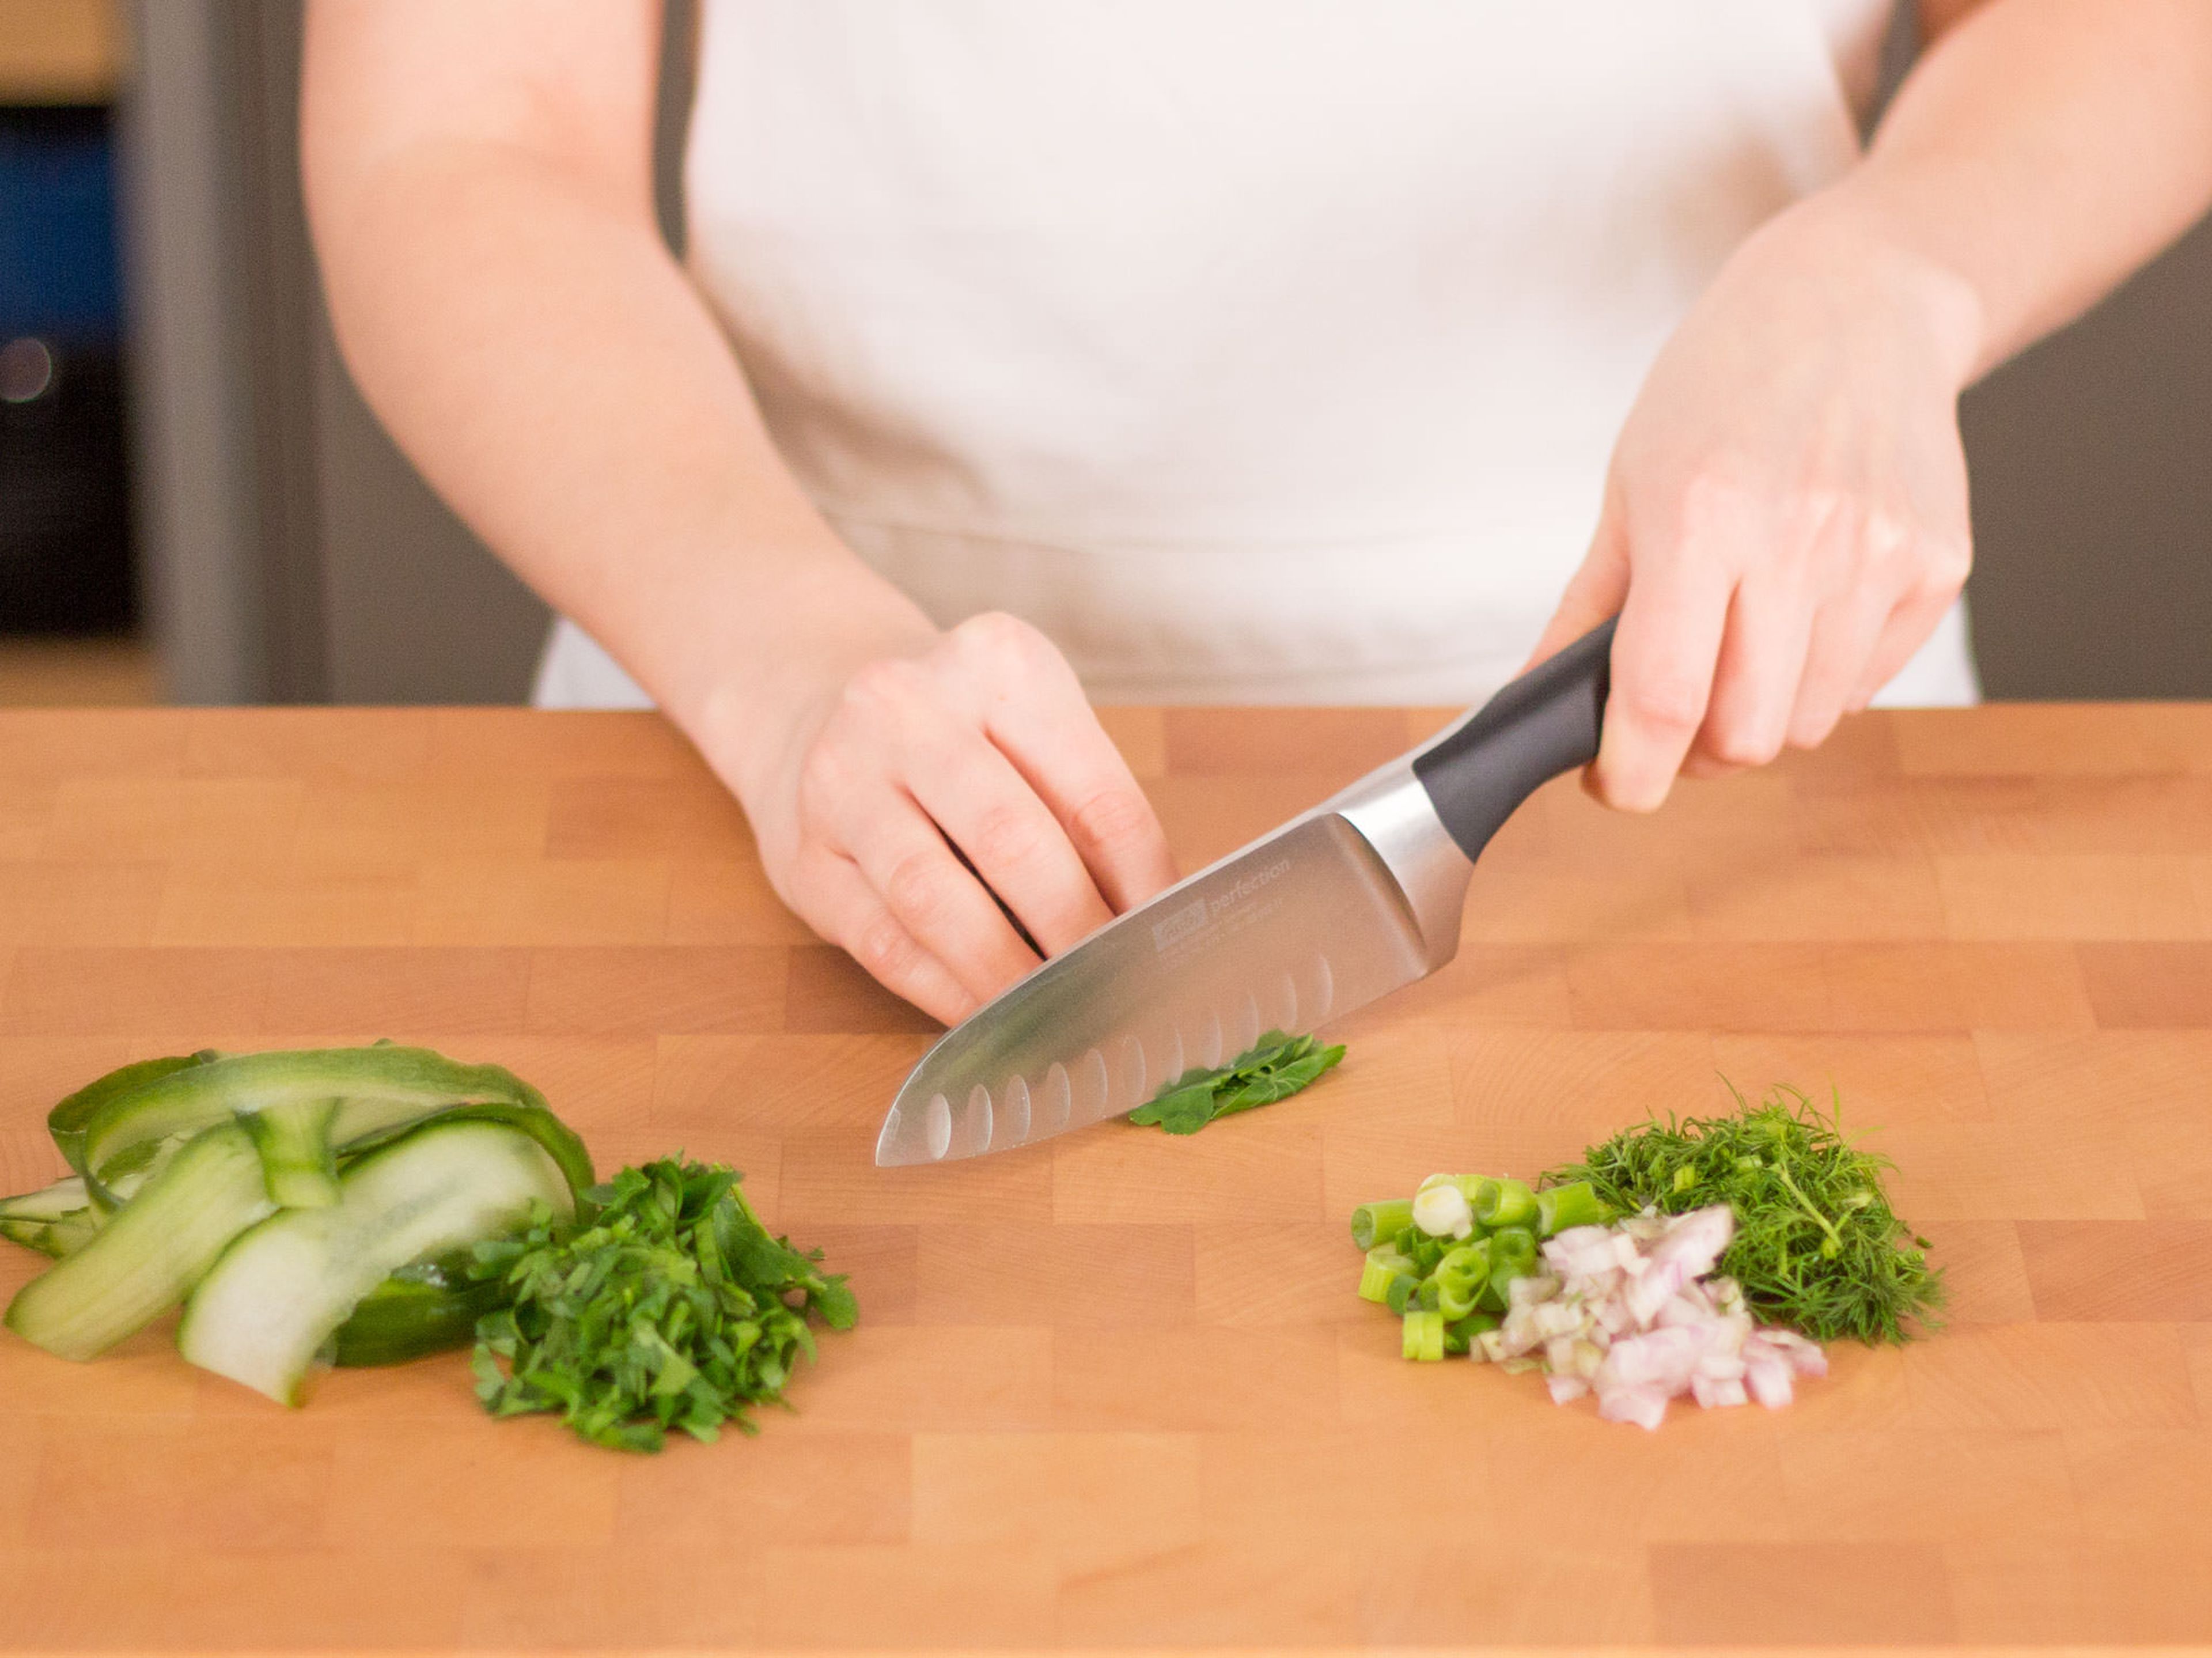 Use vegetable peeler to cut cucumber into tagliatelle-like strips.